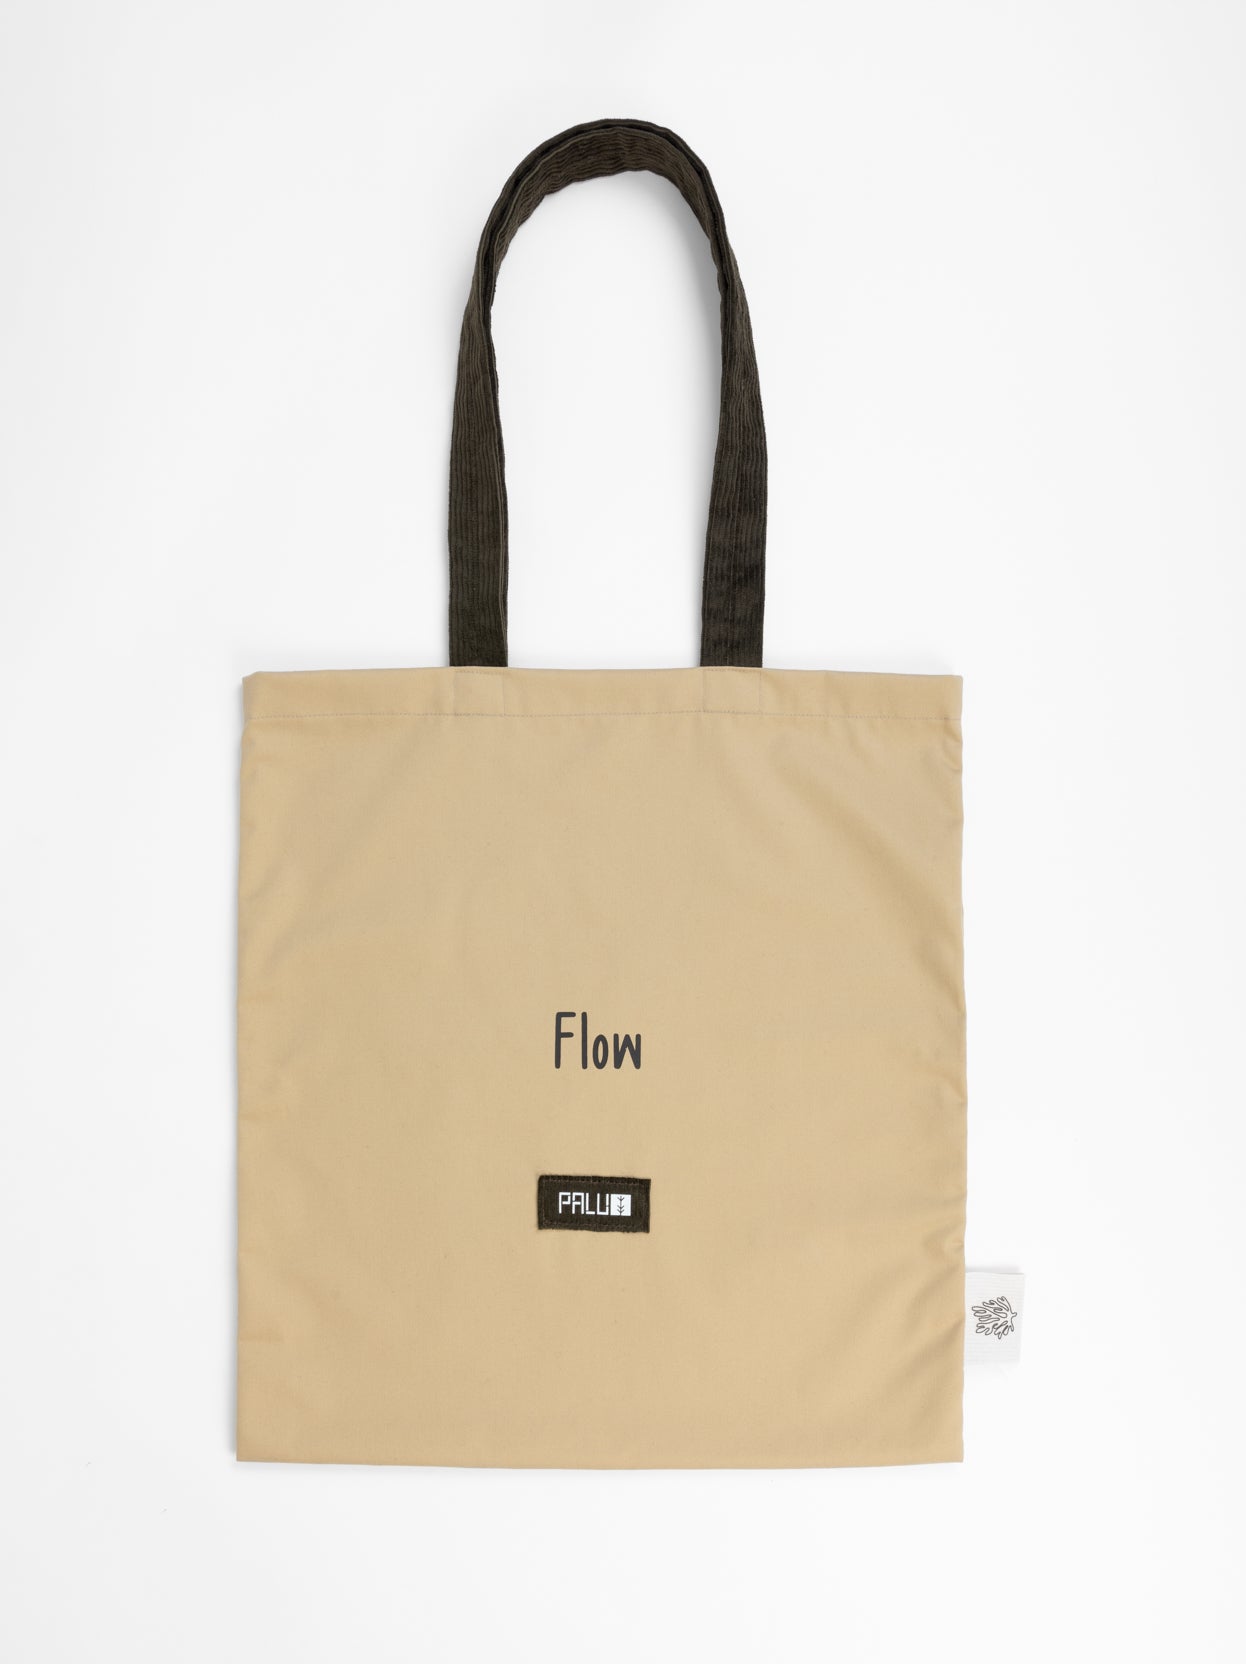 Flow tote bag front